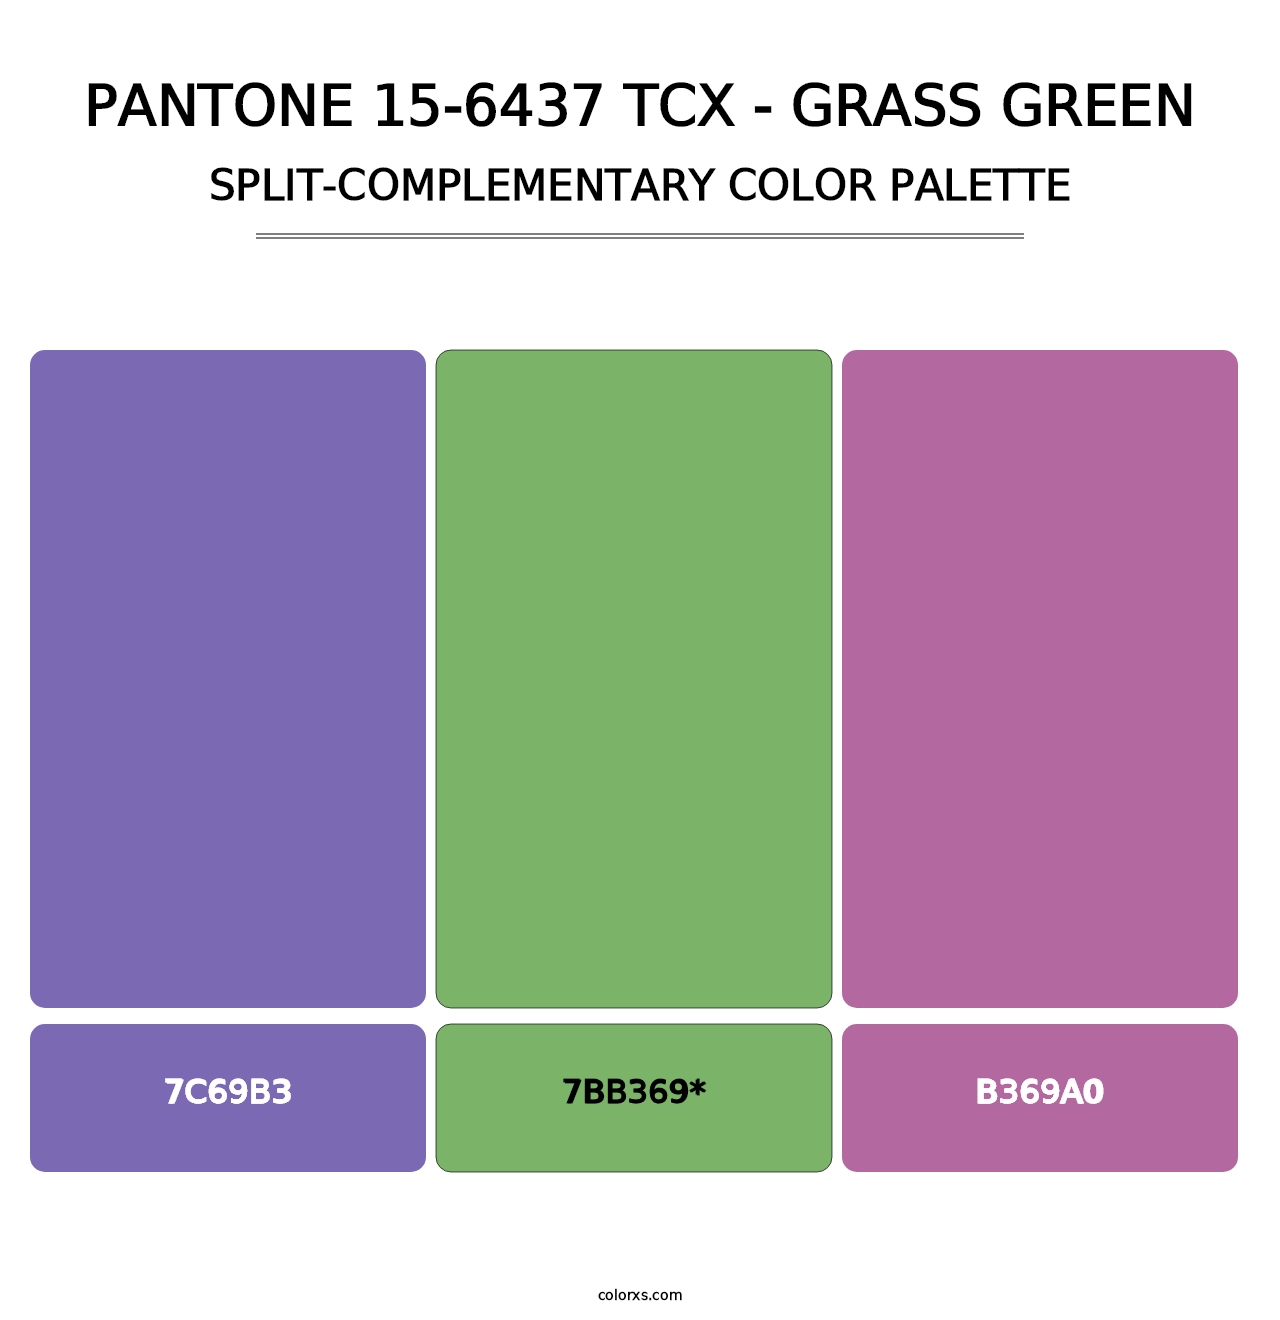 PANTONE 15-6437 TCX - Grass Green - Split-Complementary Color Palette